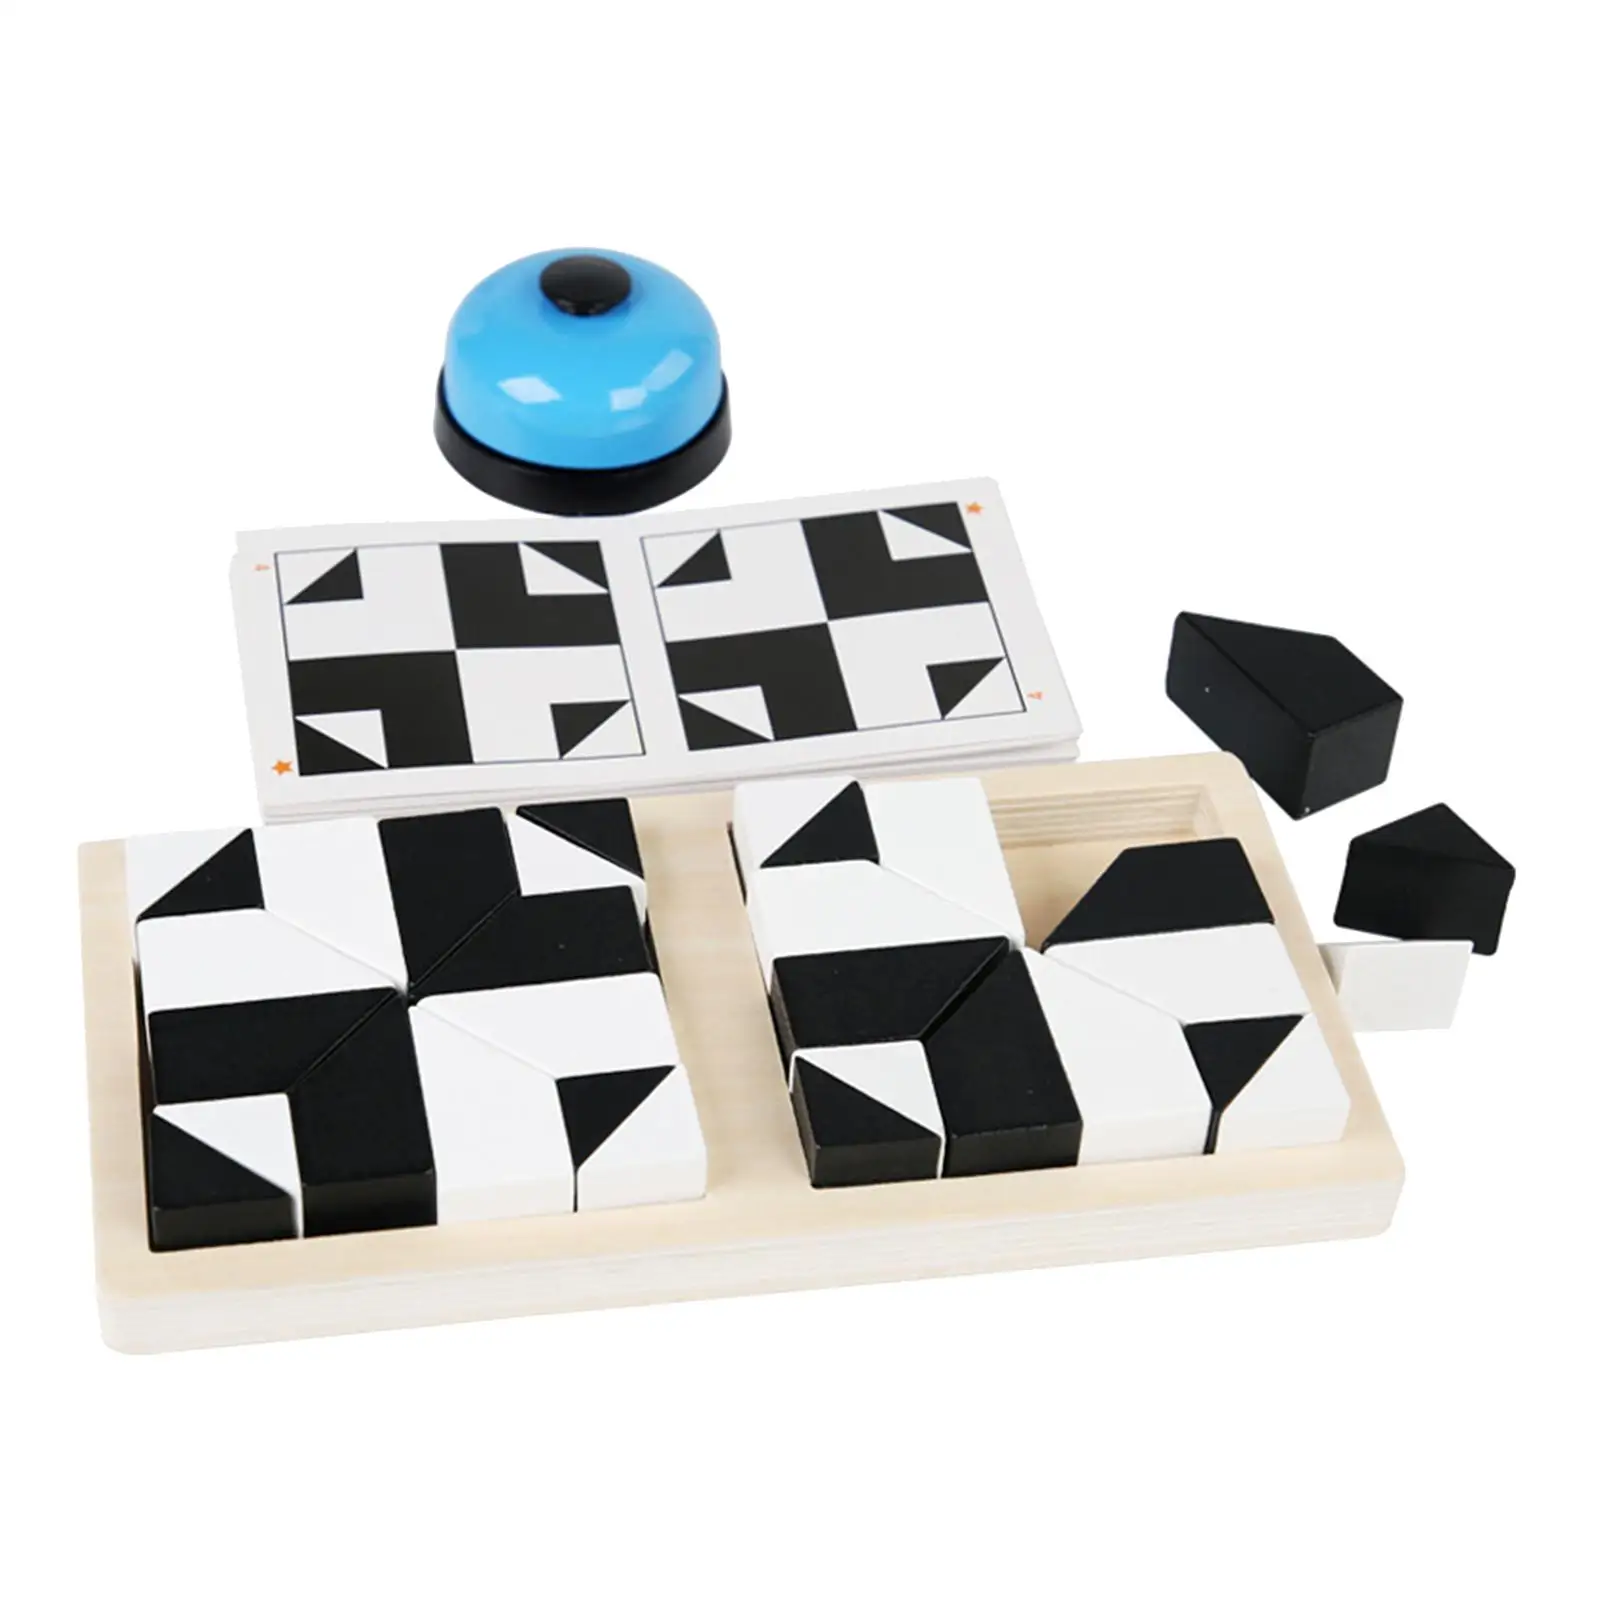 

Wooden Blocks Puzzle Birthday Gifts Educational Toy Intelligence 3D Jigsaw for Boy Children Preschool Ages 4-8 Kindergarten